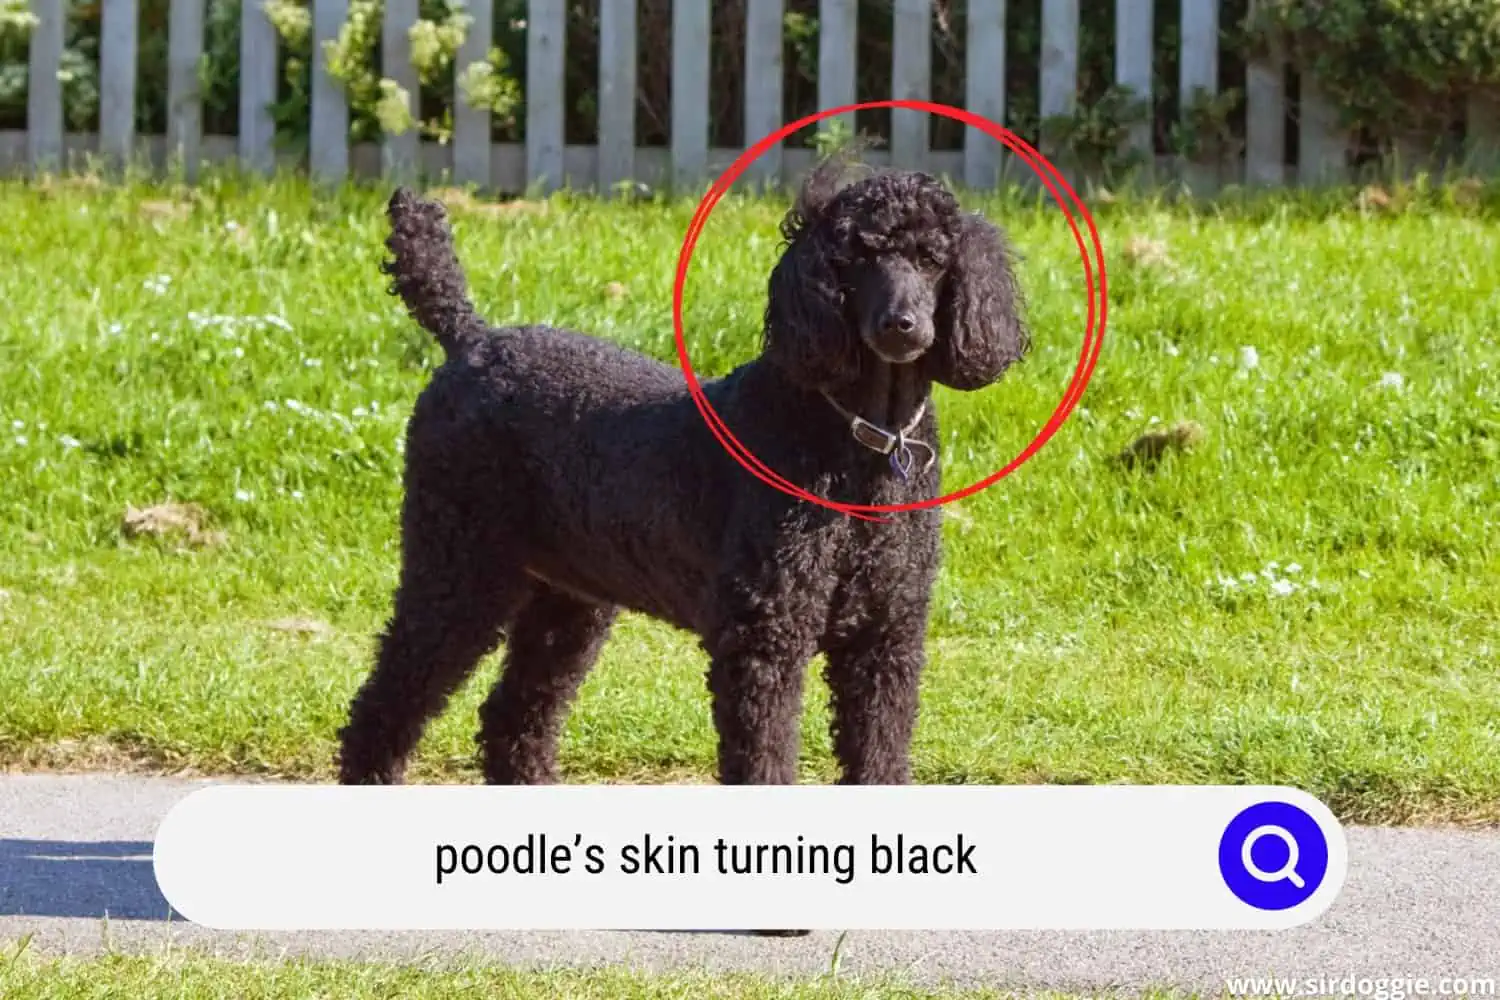 poodle's skin turning black